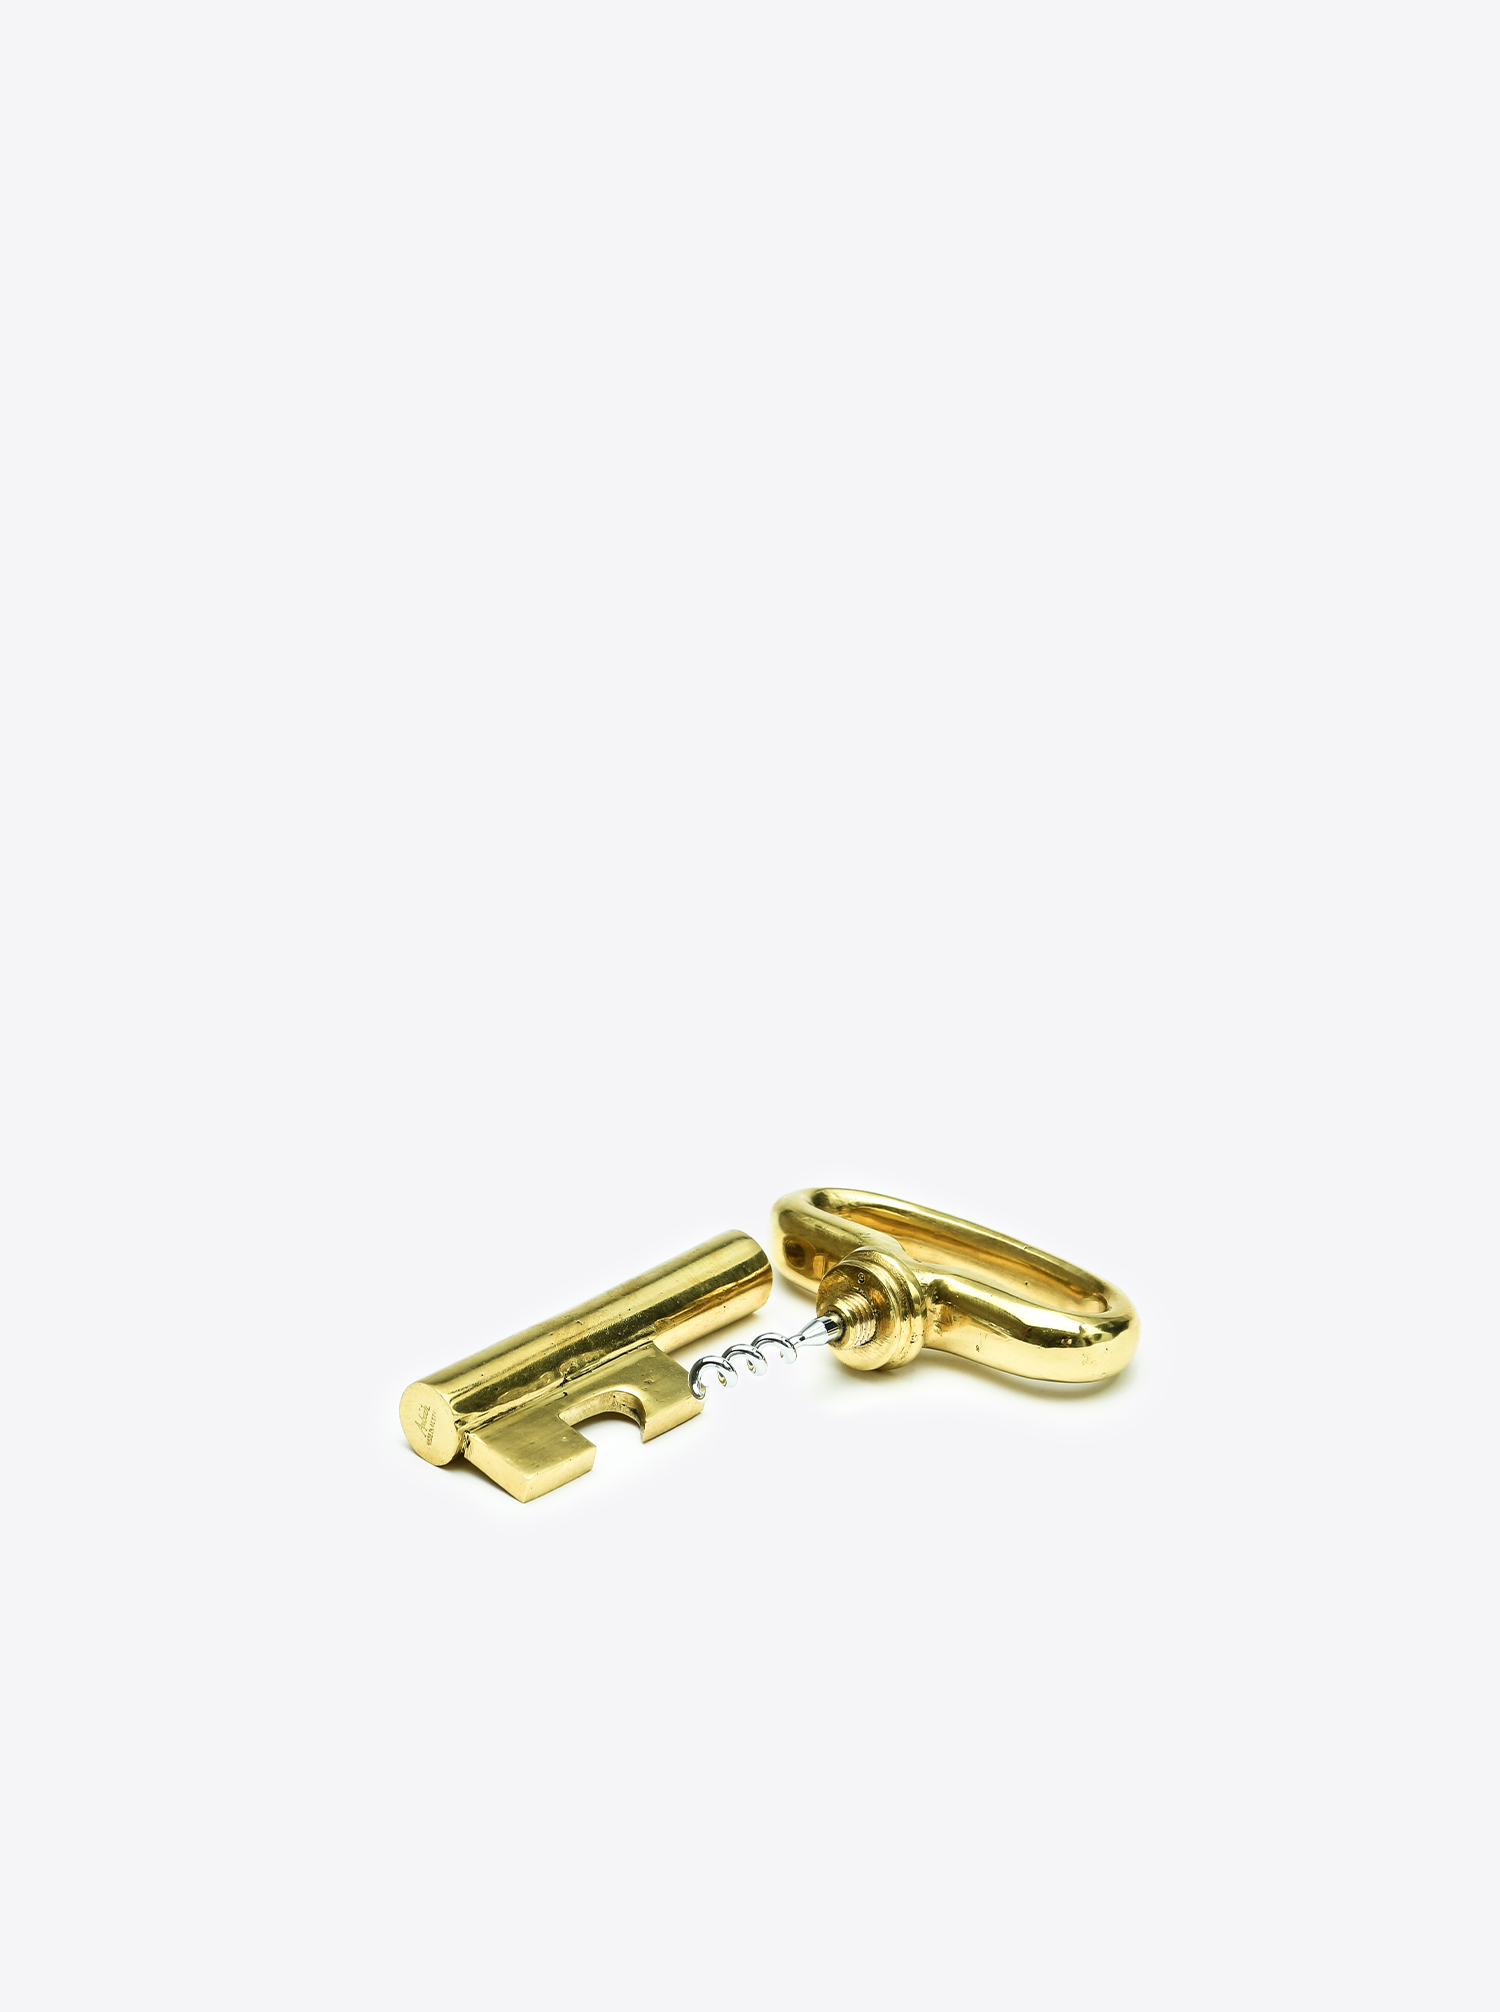 Corkscrew &quot;Key&quot; Brass polished